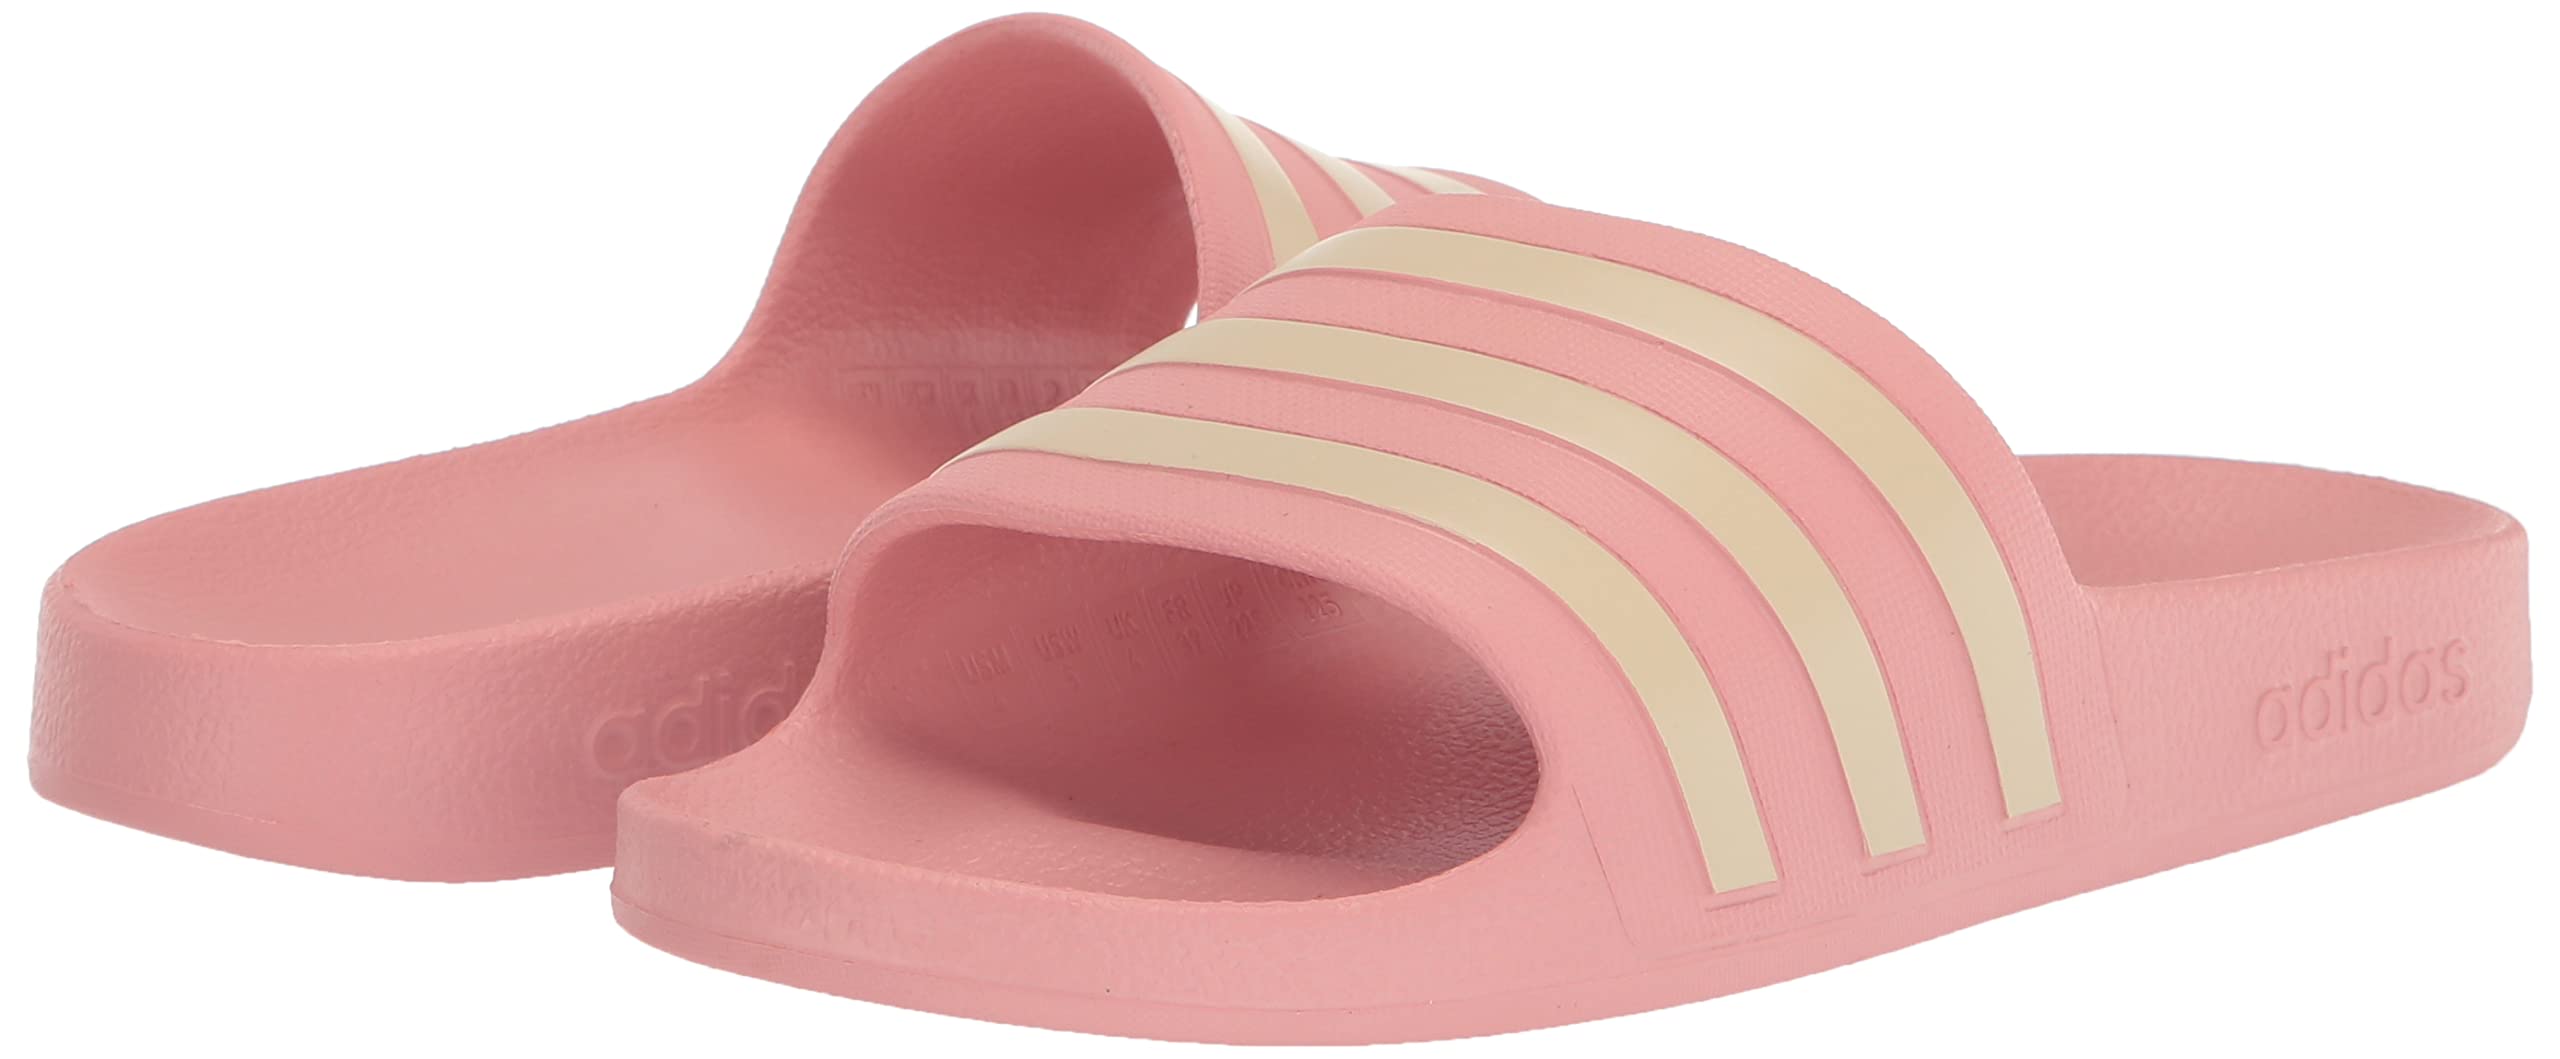 adidas Women's Adilette Aqua Slide Sandal